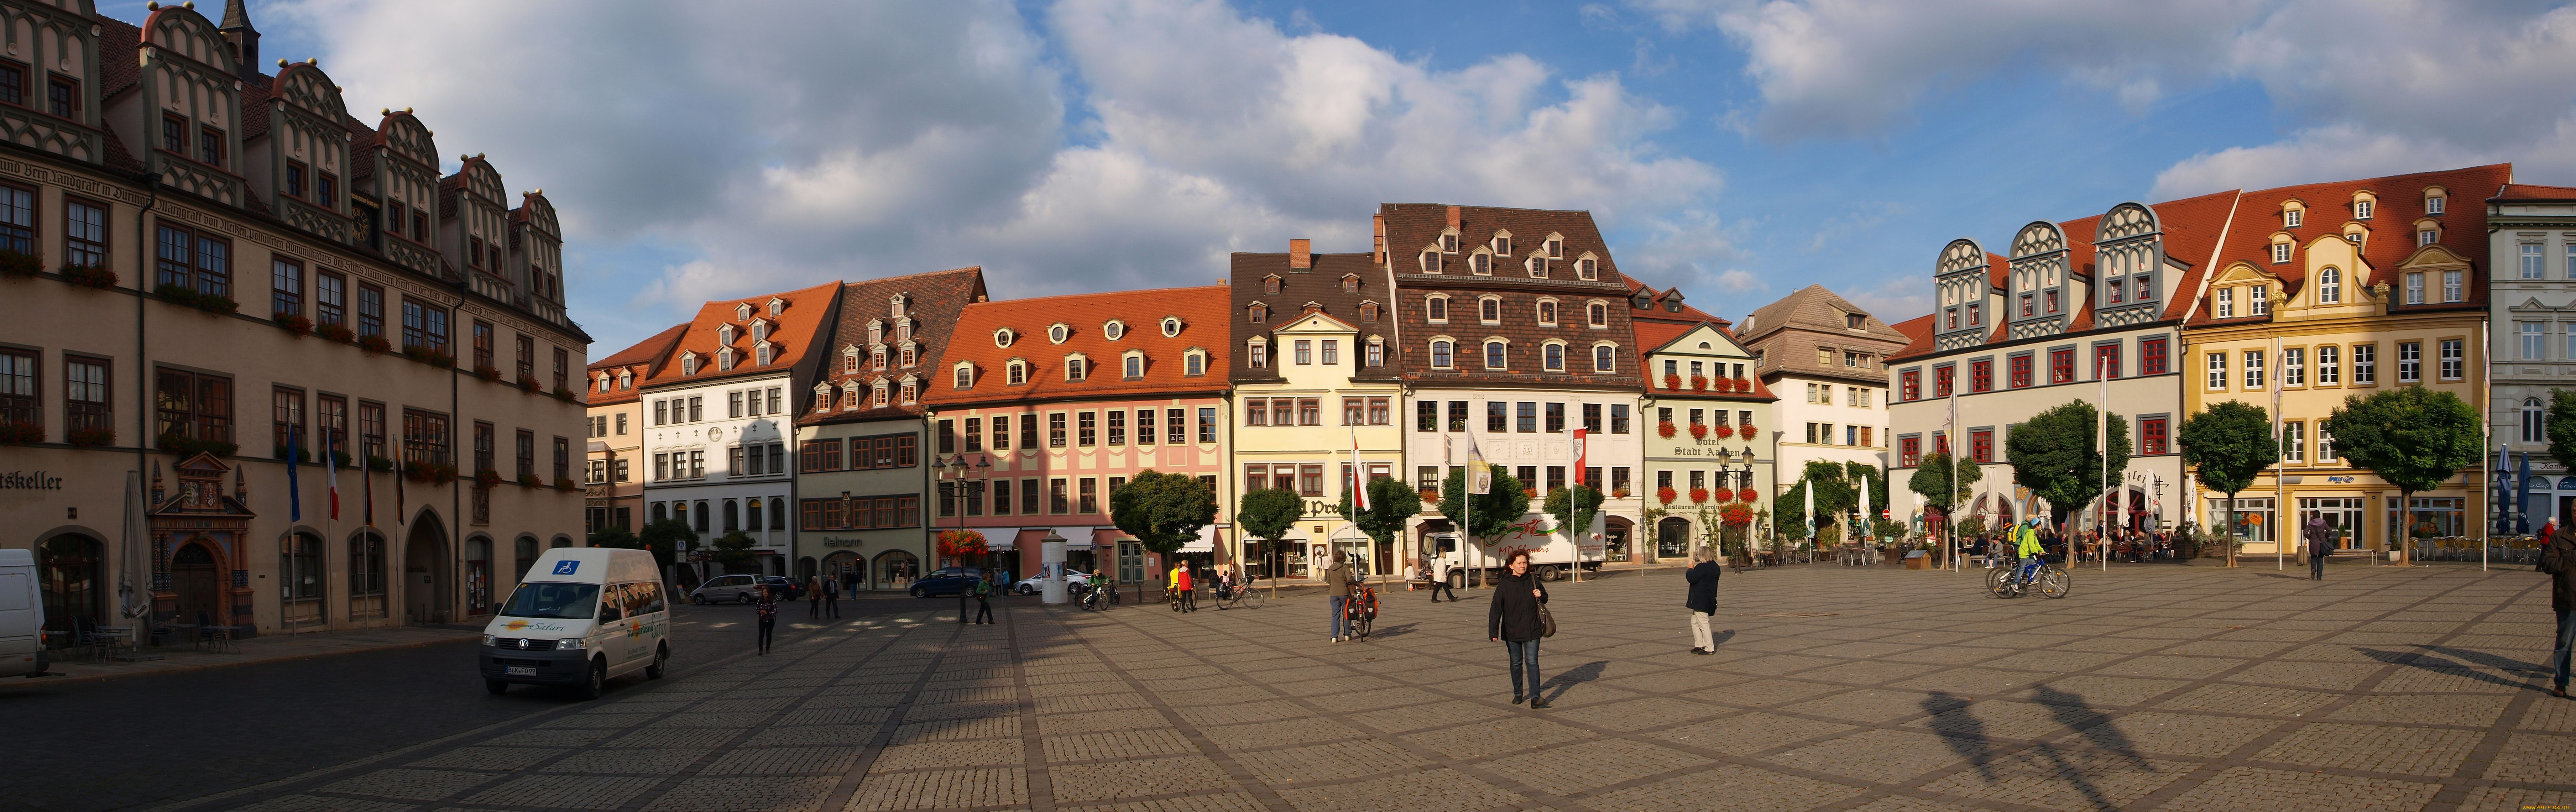 marktplatz, naumburg, города, улицы, площади, набережные, германия